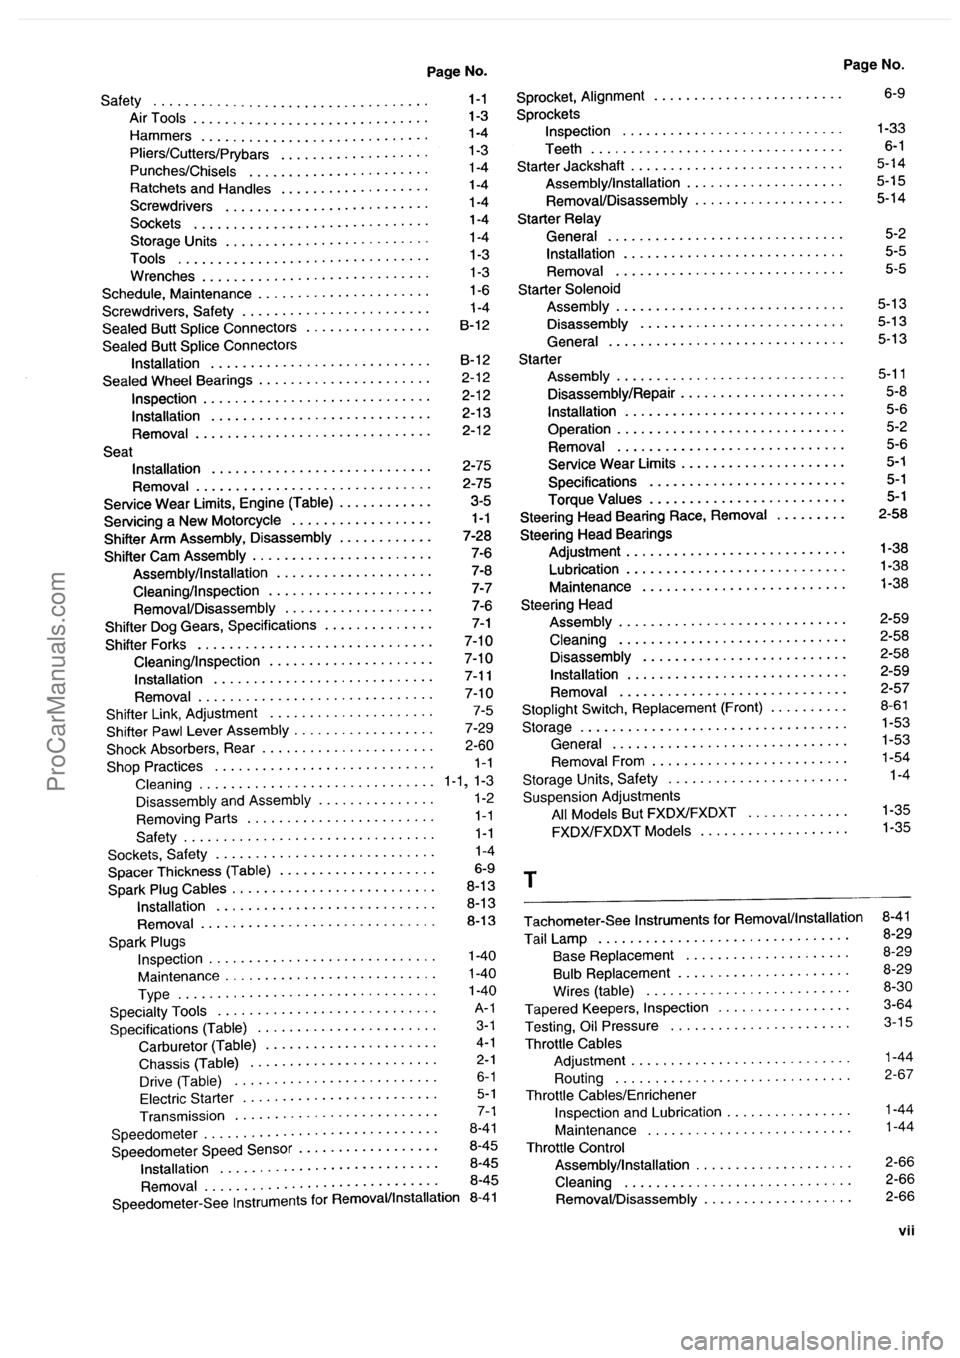 HARLEY-DAVIDSON DYNA GLIDE 2003  Service Manual  [9]
ProCarManuals.com 